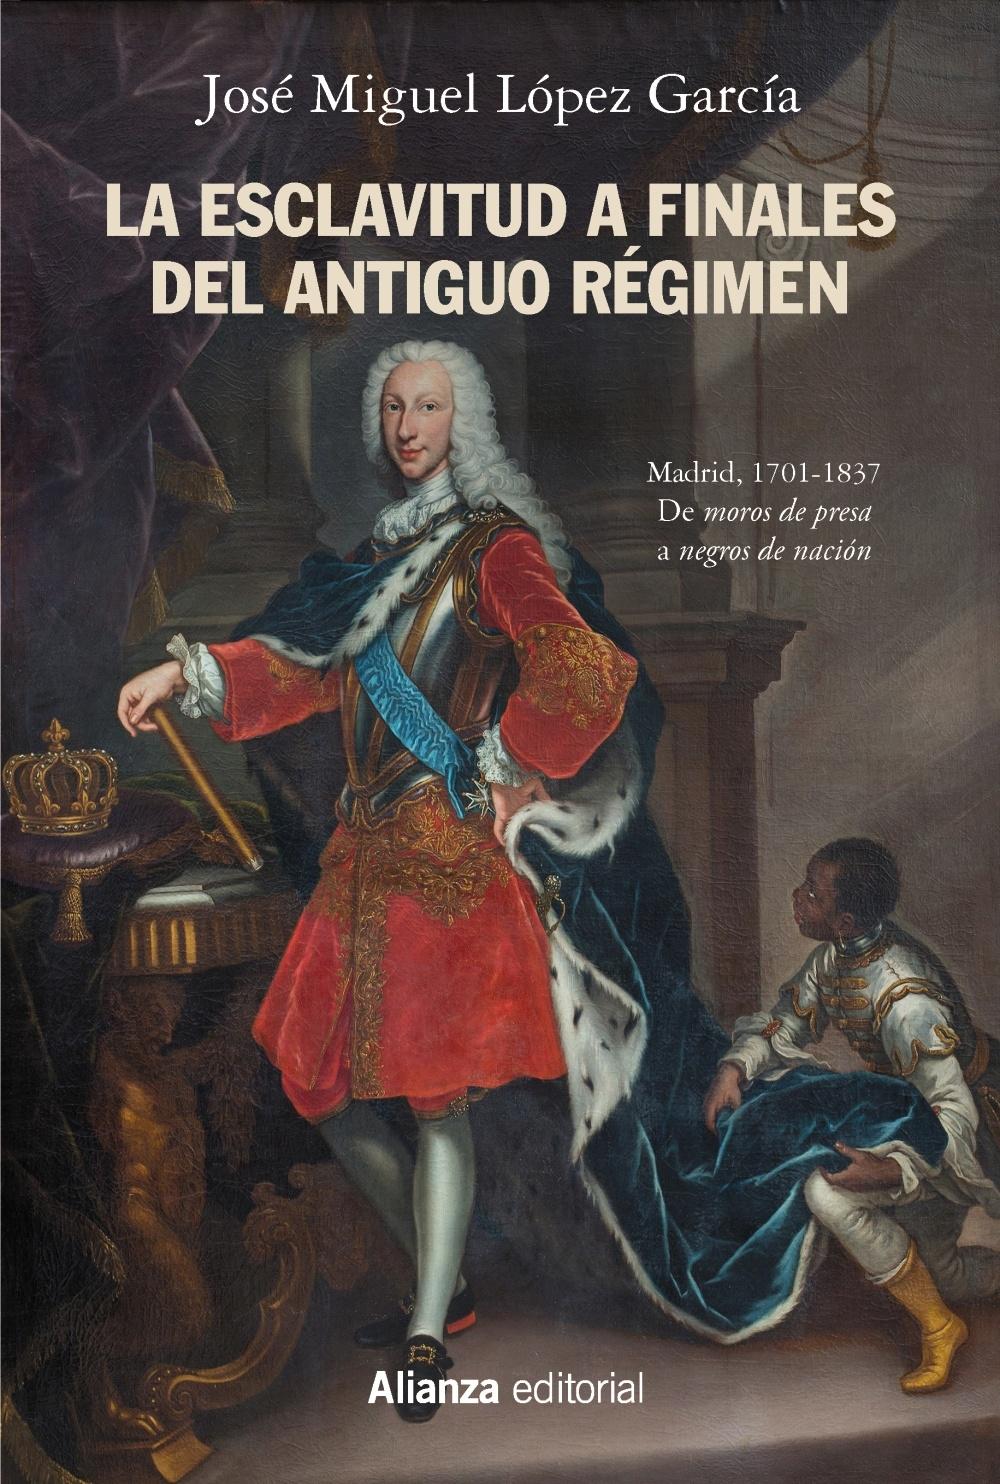 La Esclavitud a Finales del Antiguo Régimen. Madrid, 1701-1837. 